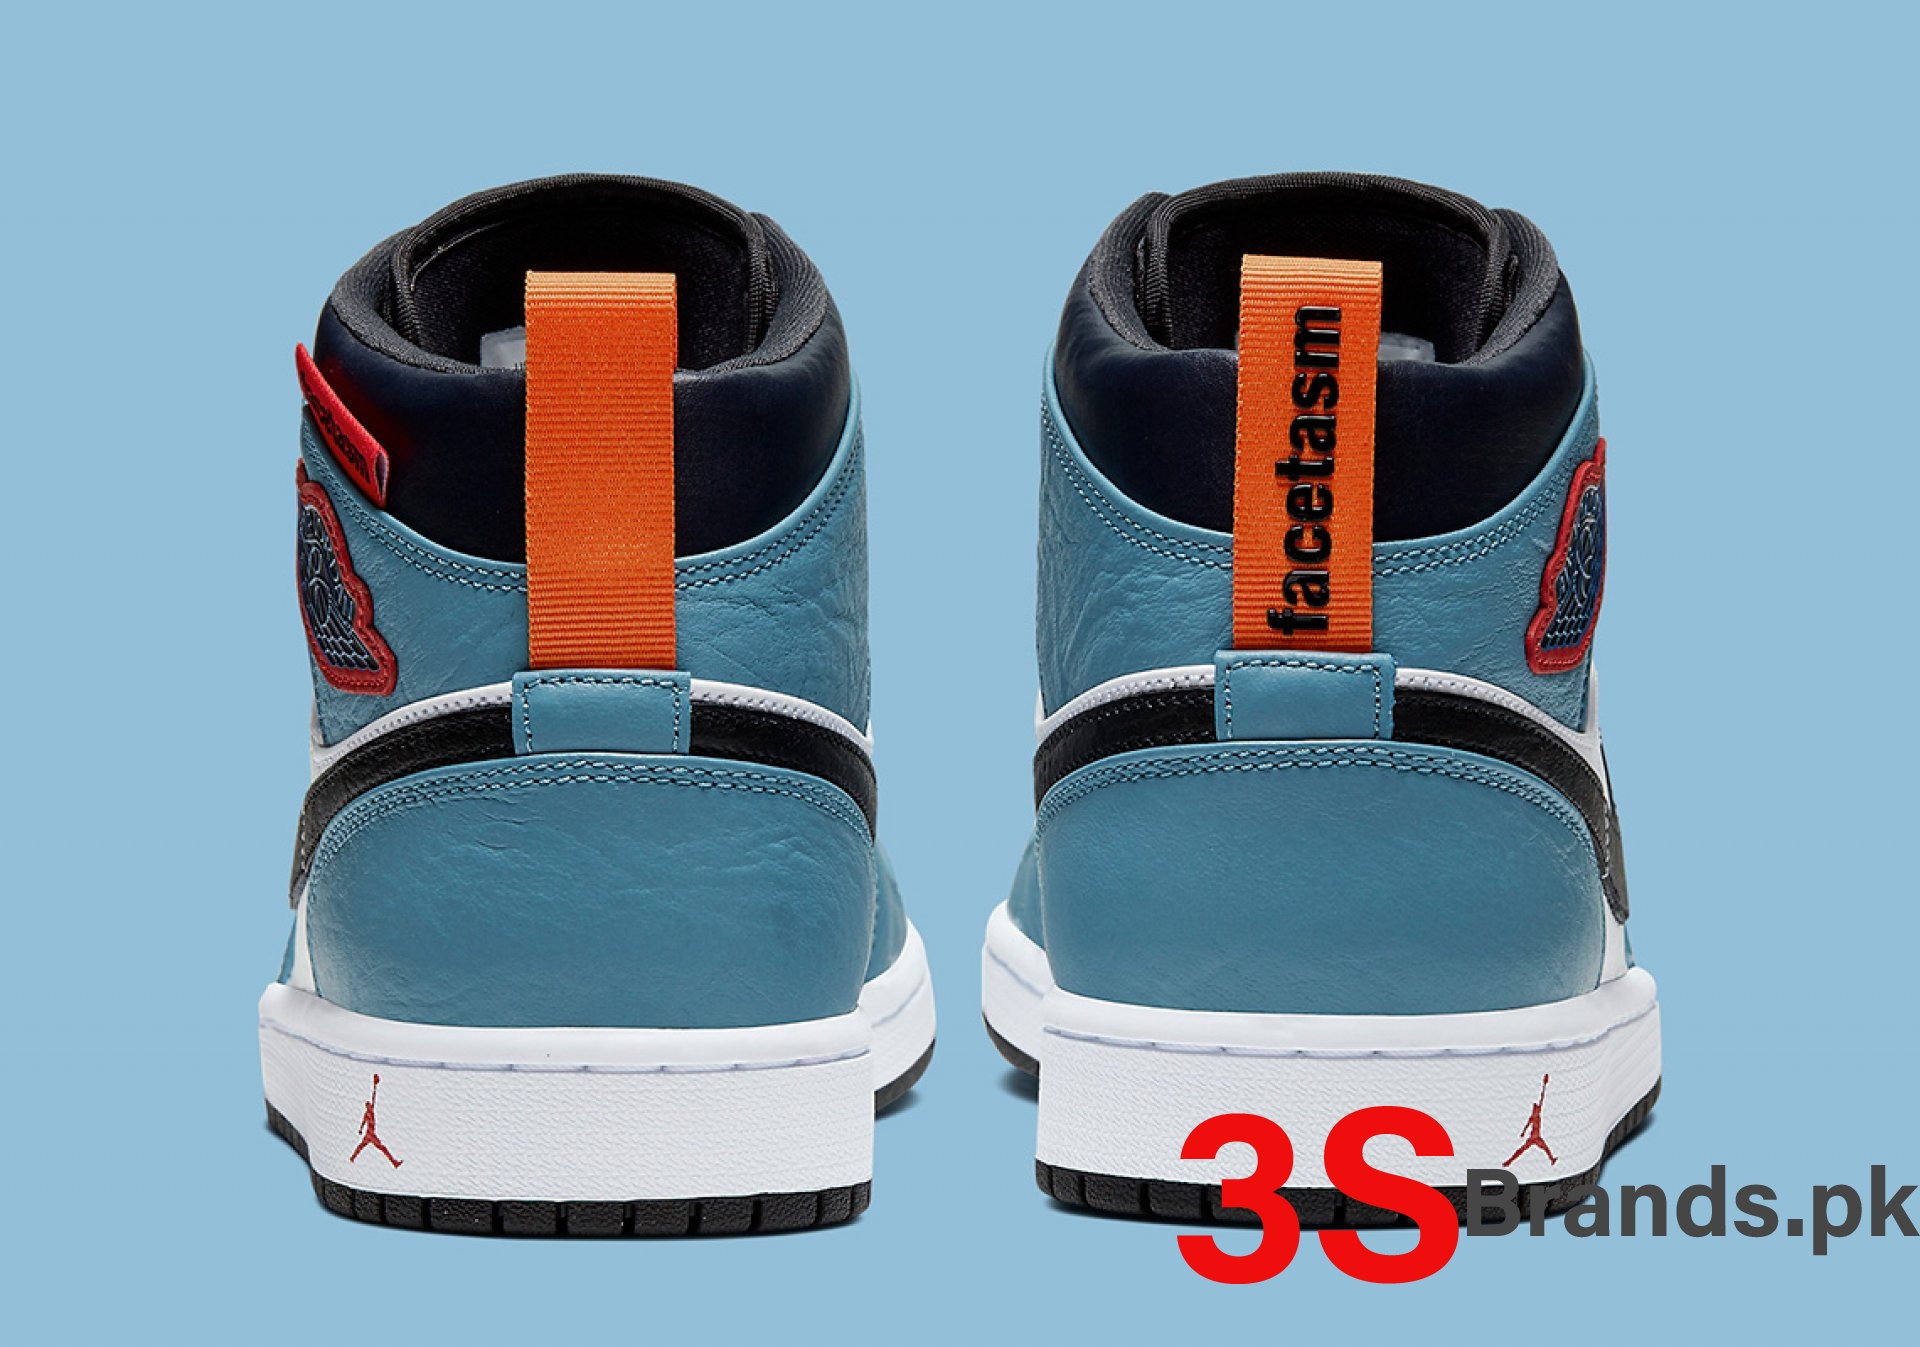 Facetasm x Air Jordan 1 Mid 'Fearless' - 3sbrands.pk